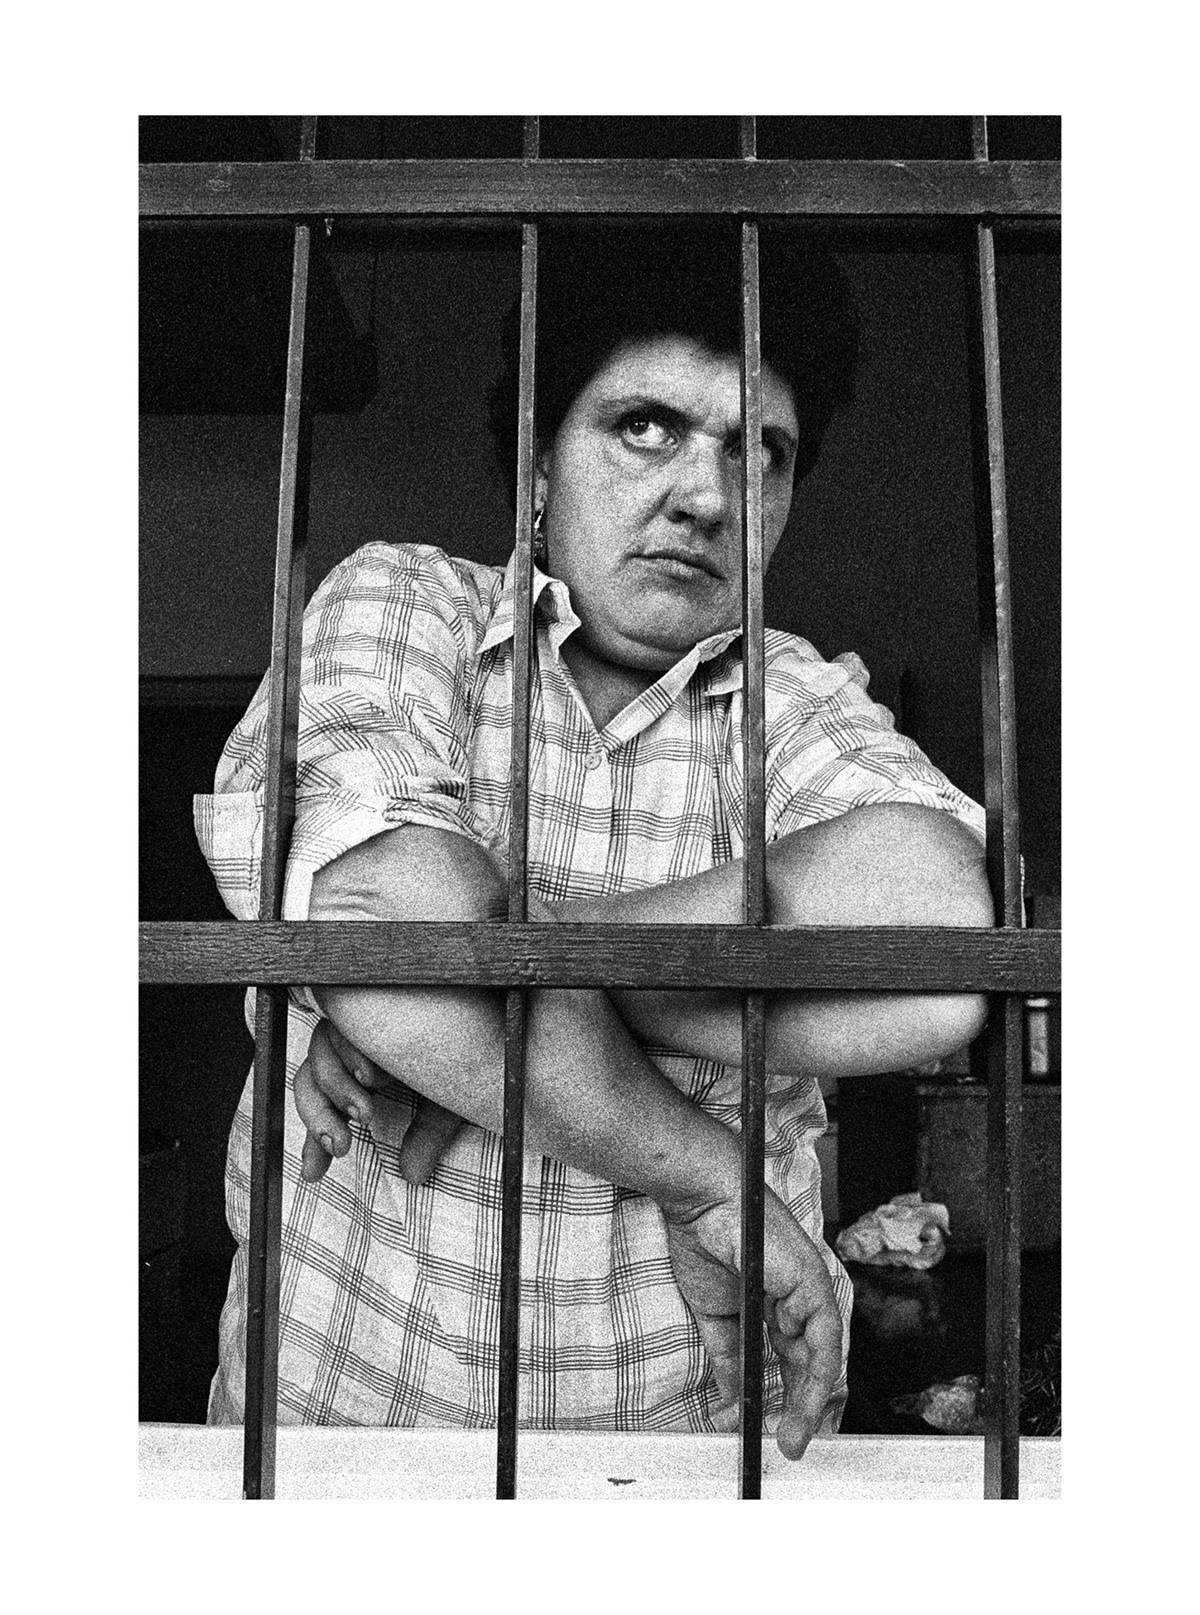 black and white film photograpy tmax 3200 Tri-x portrait asylum Sanitarium madness Psychiatry hospital basaglia law